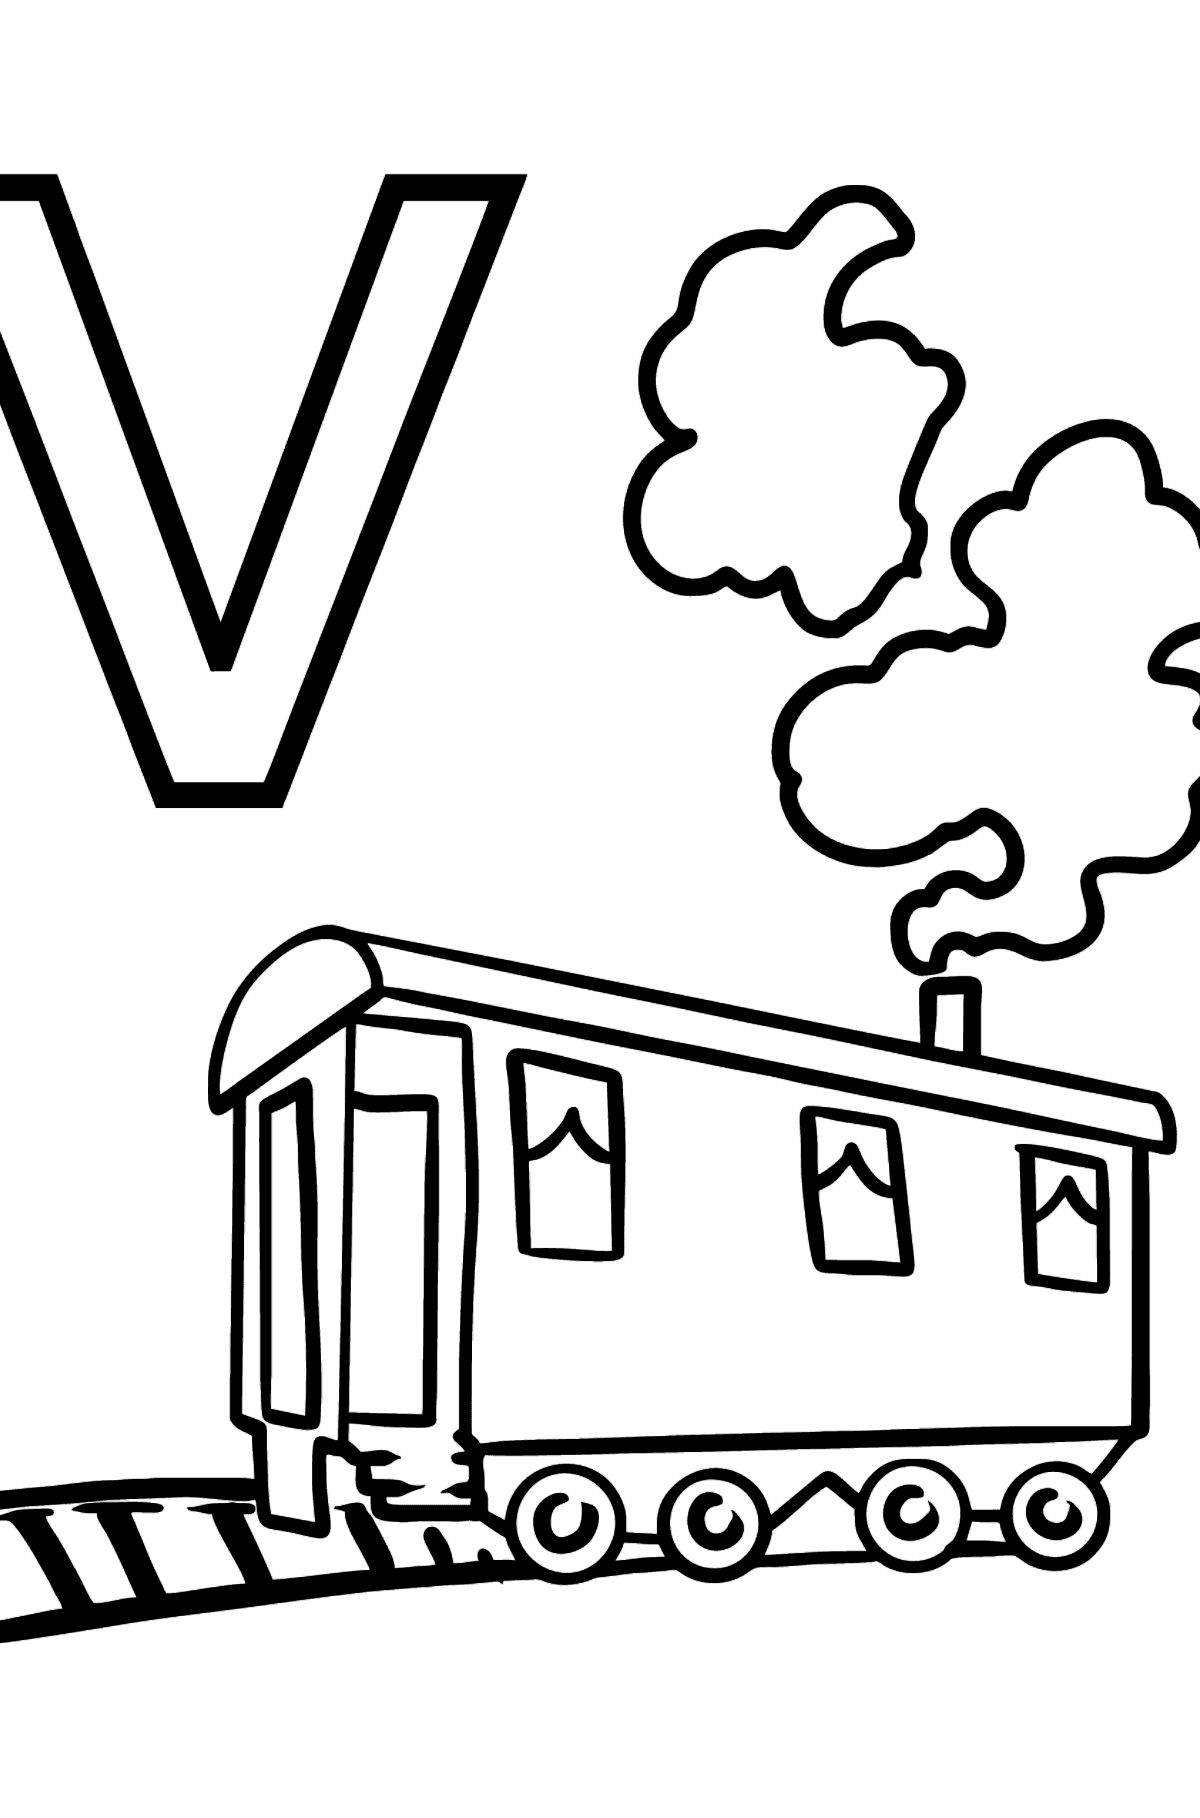 Dibujo de Letra V inglesa para colorear - VAGON - Dibujos para Colorear para Niños